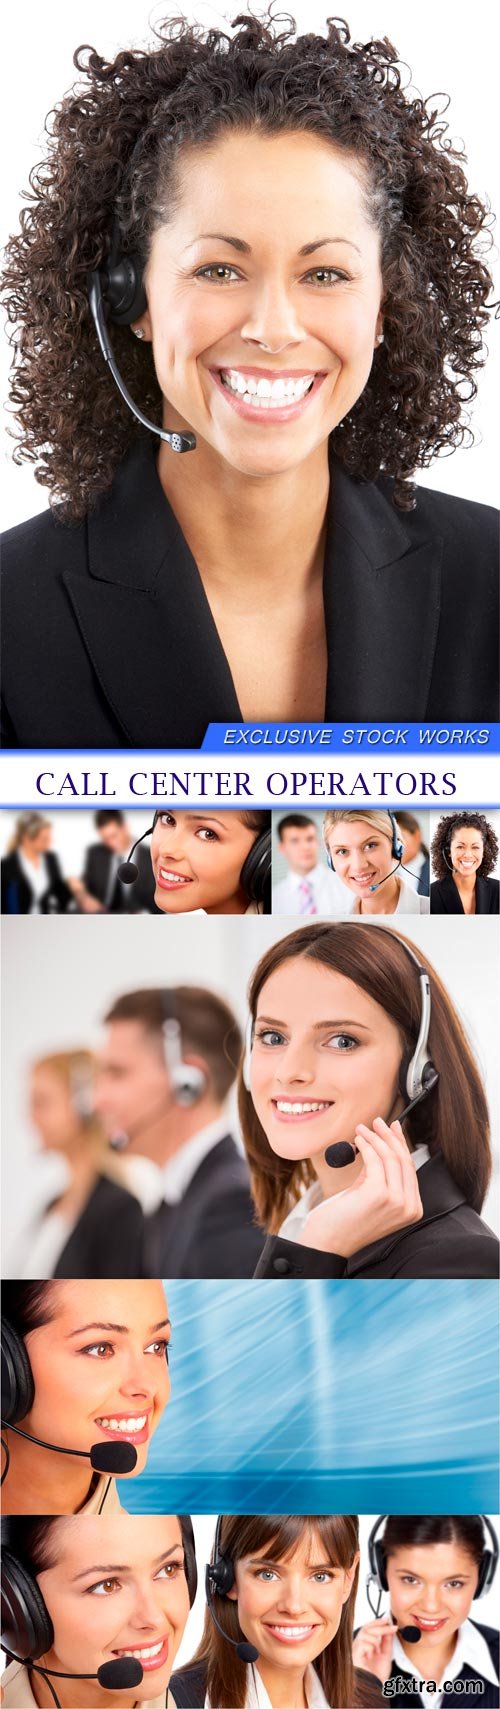 Call Center Operators 6xJPG